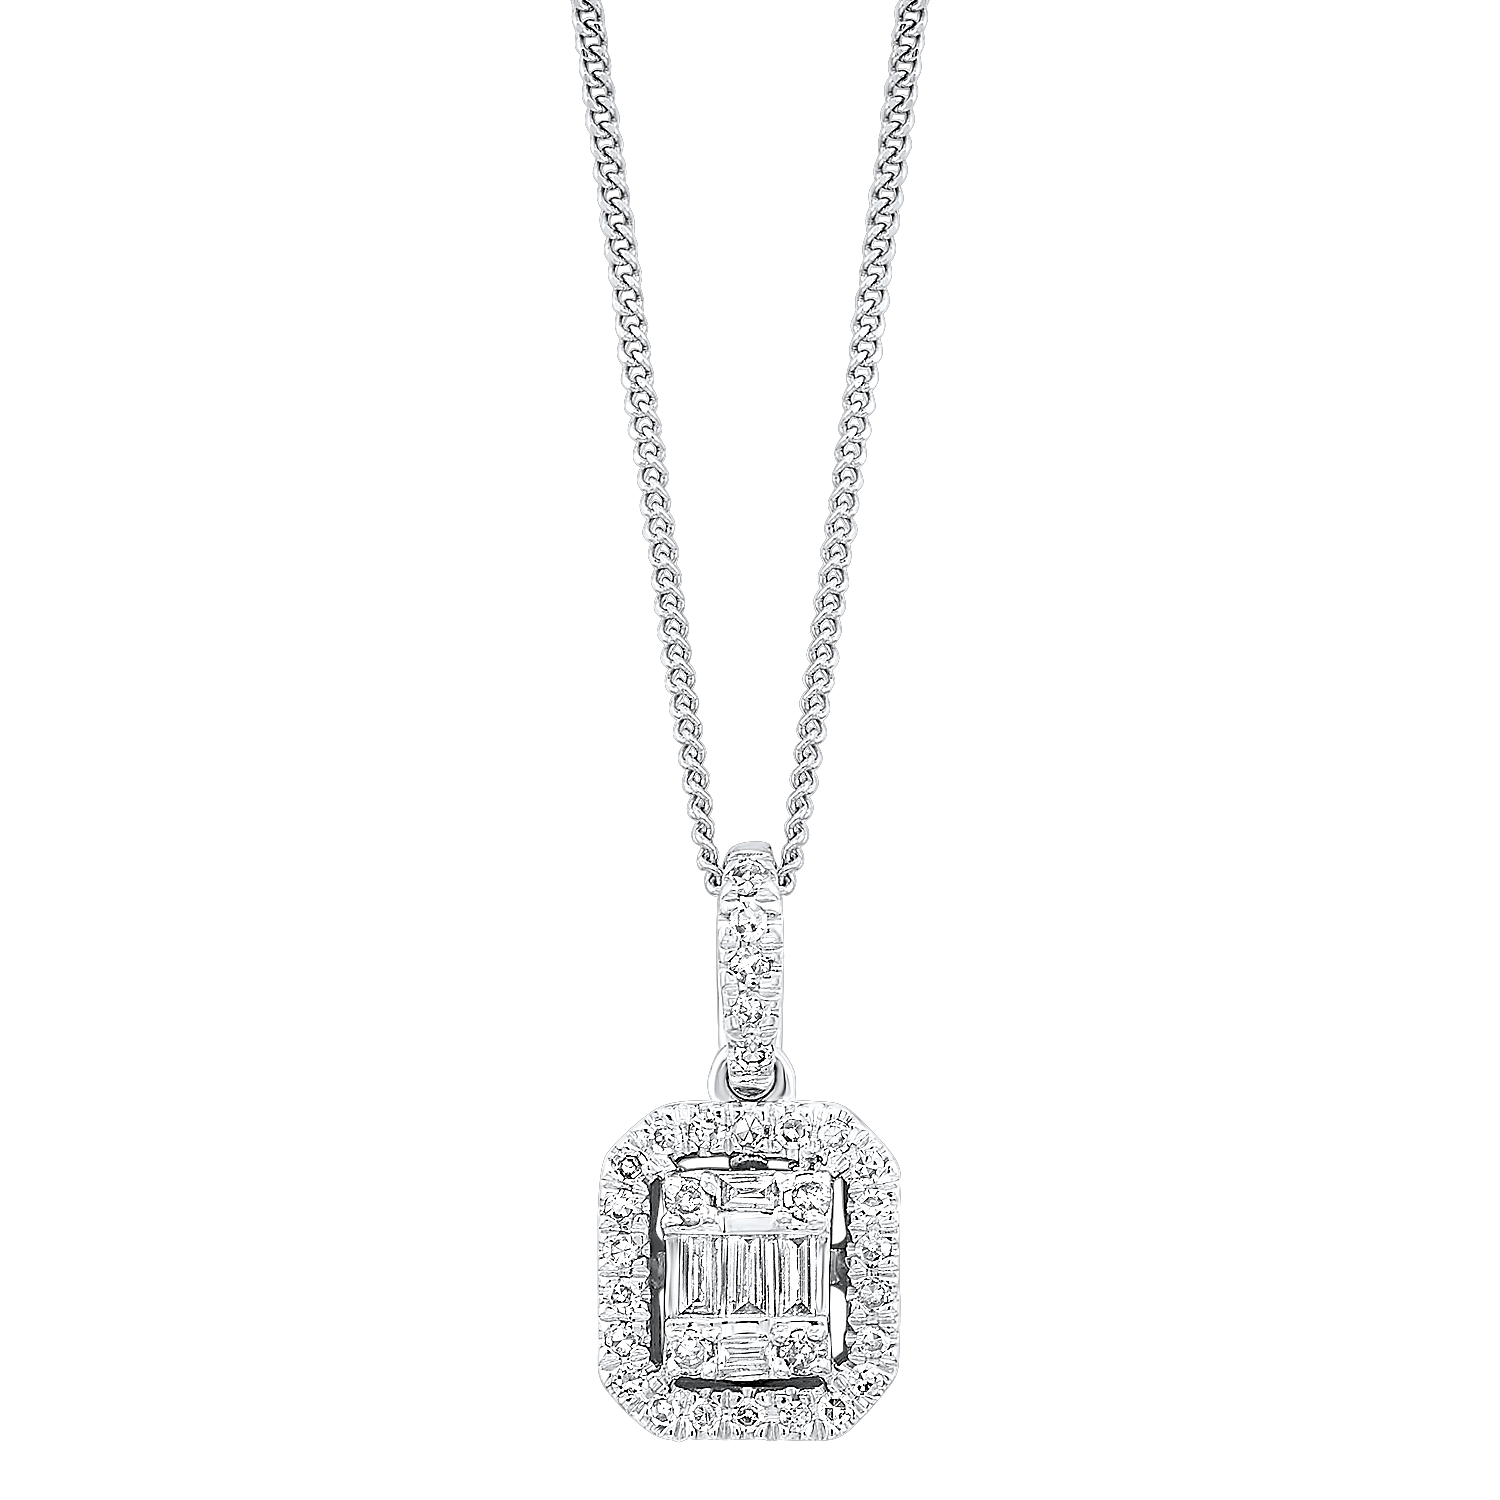 BW James Jewelers Pendant 16 Page Christmas Catalog Offer 14K Diamond Pendant 1ctw